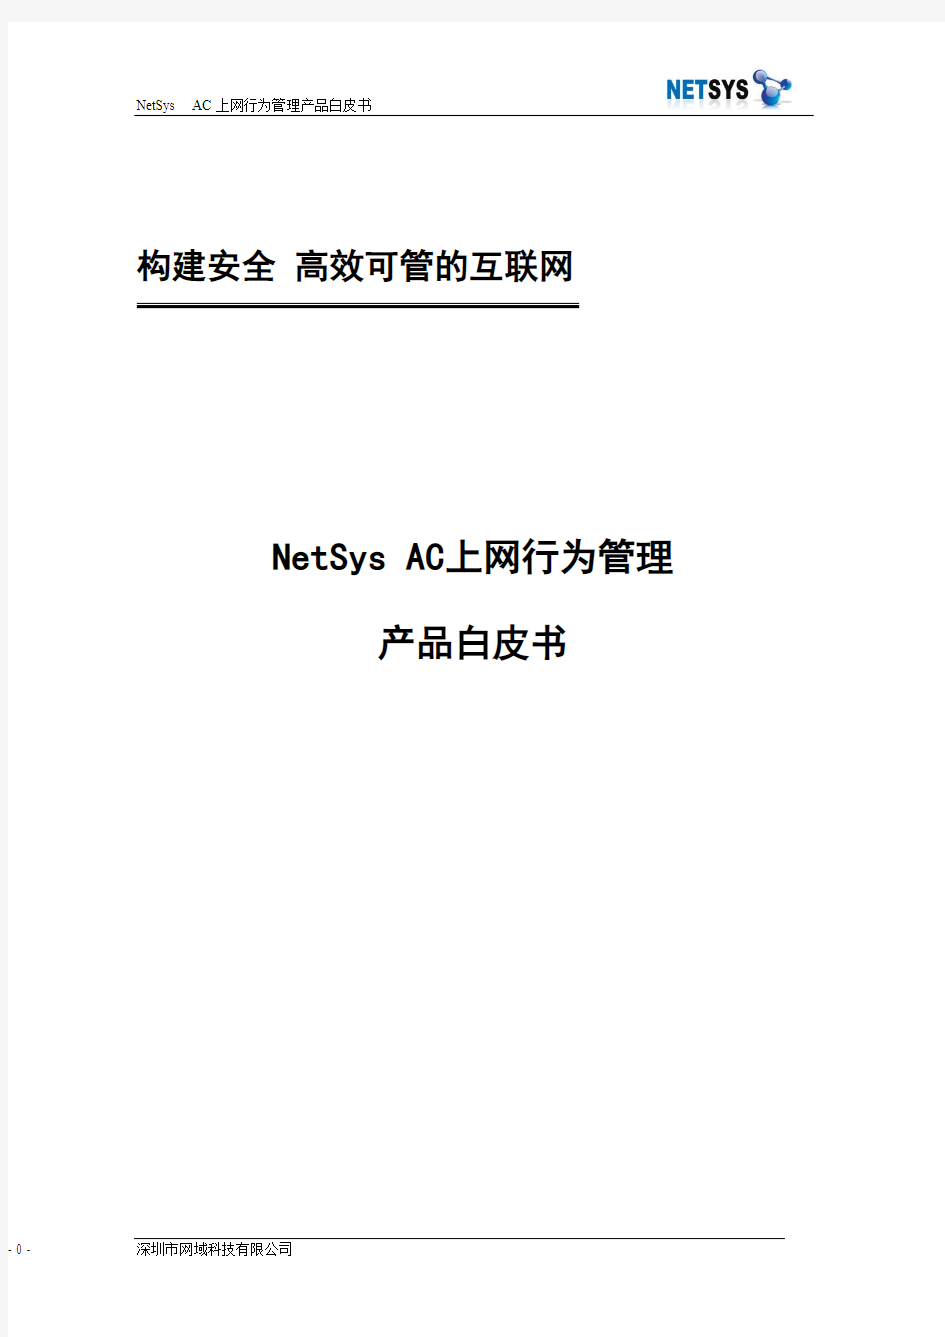 NetSys AC上网行为管理网关技术白皮书 2010